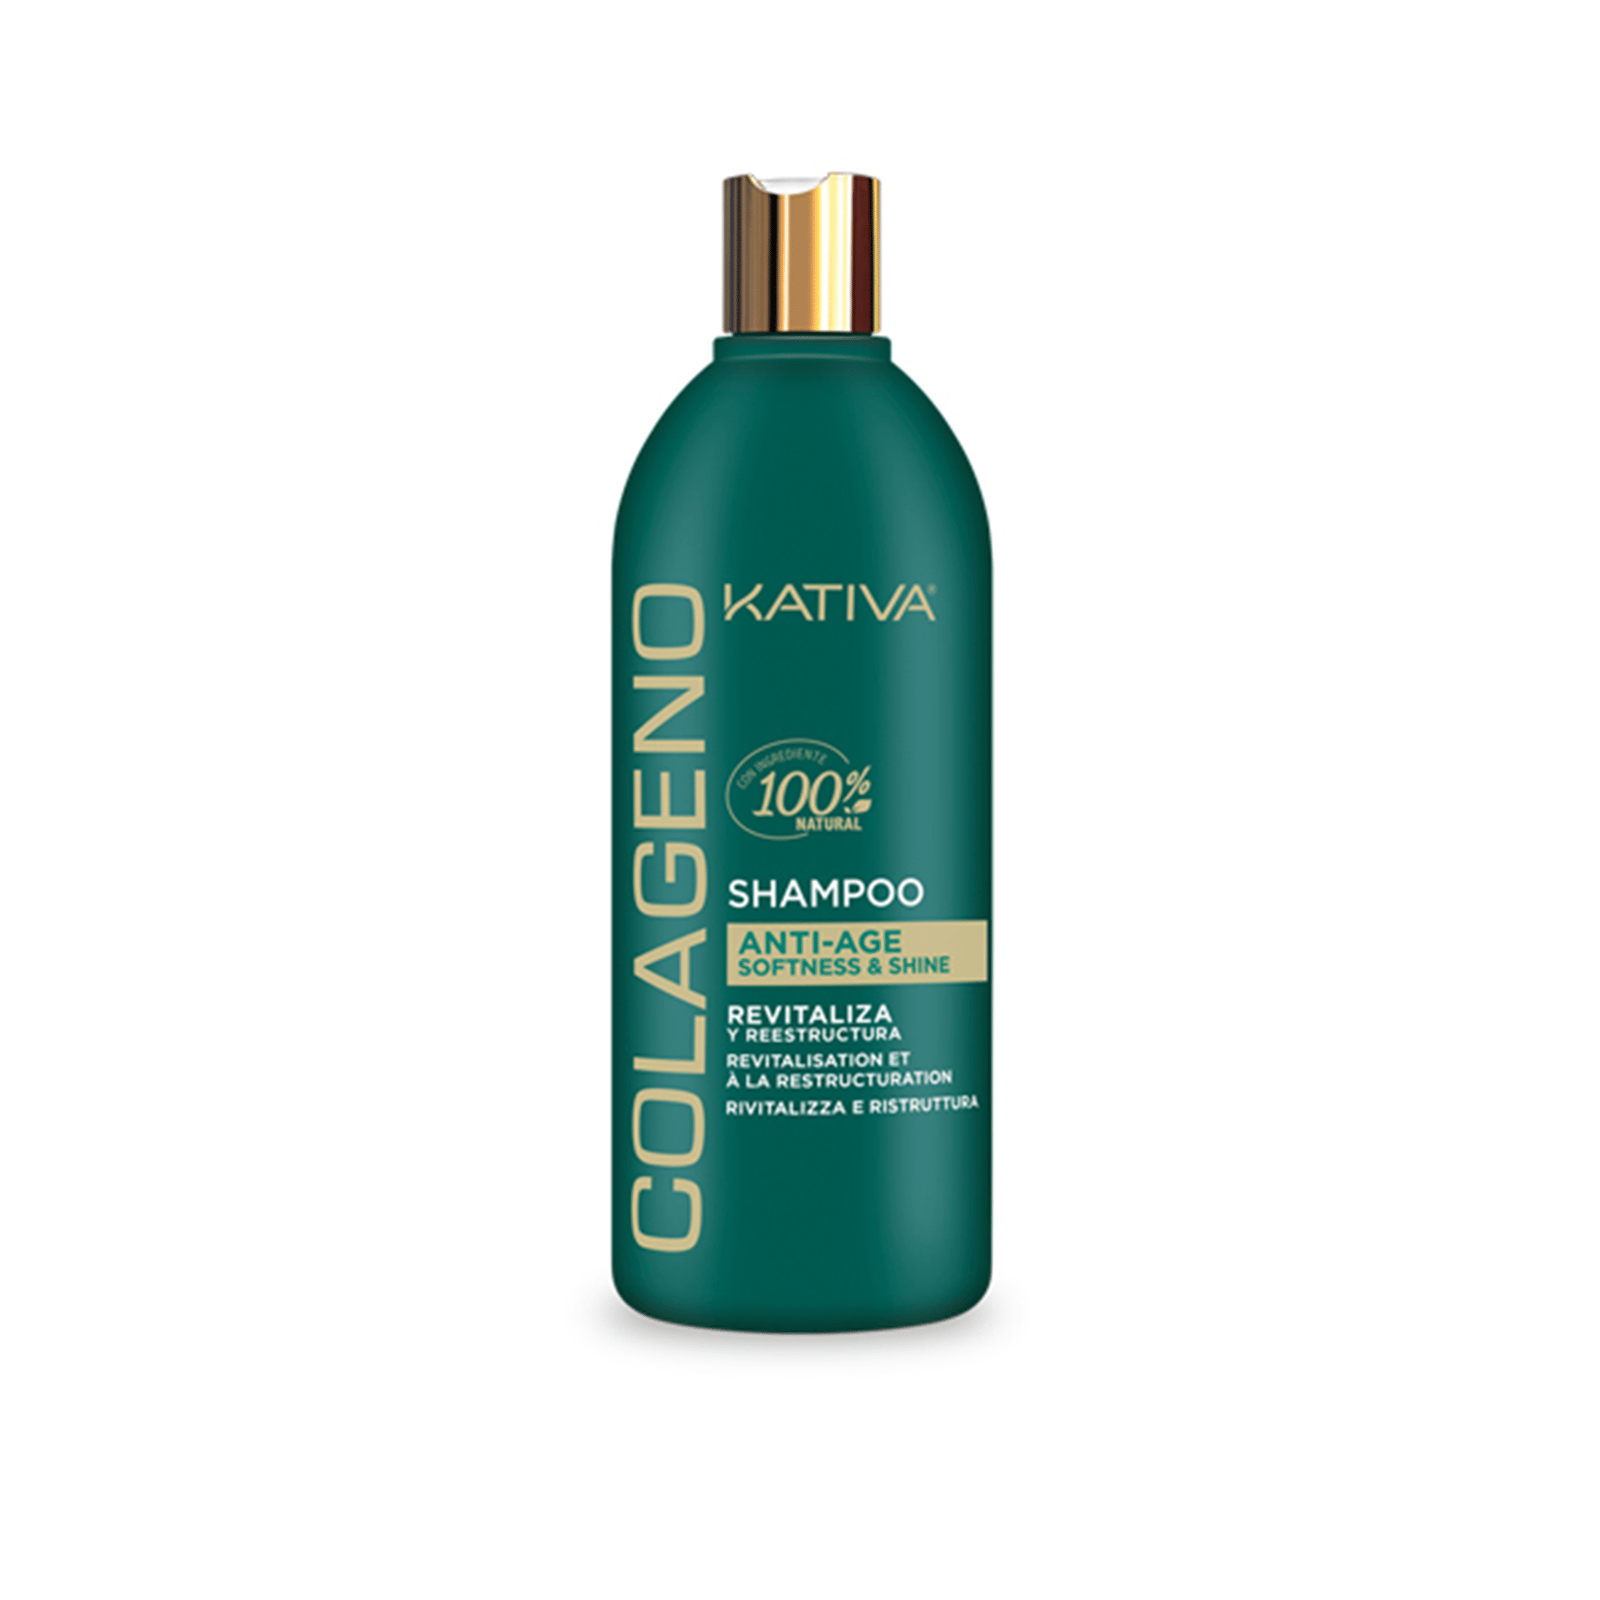 Kativa Collagen Anti-Age Softness & Shine Shampoo 500ml (16.9 fl oz)